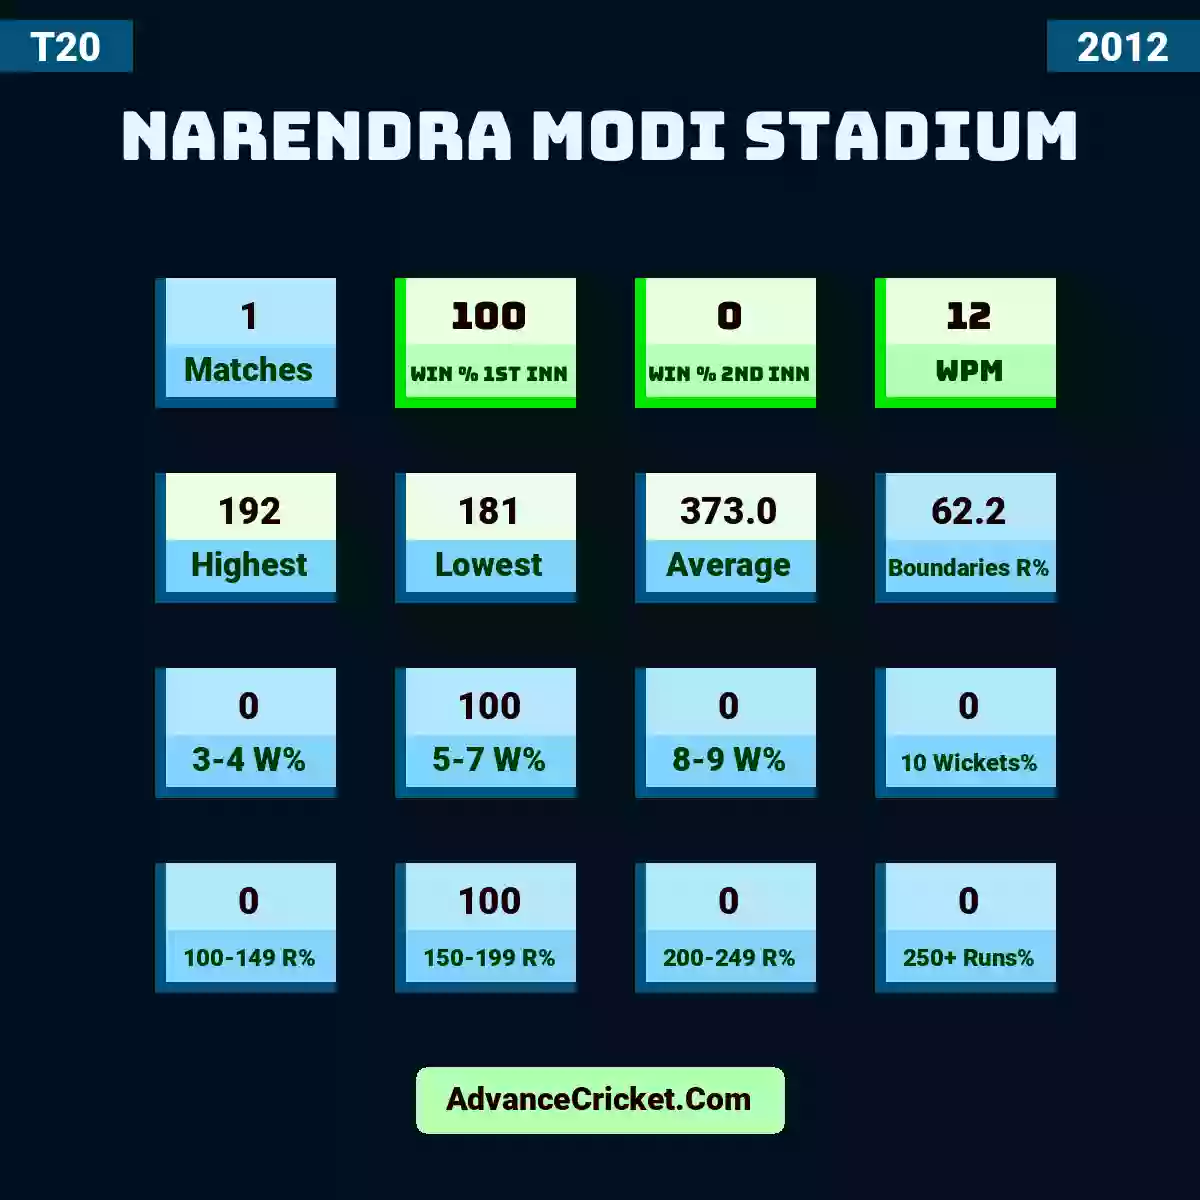 Image showing Narendra Modi Stadium with Matches: 1, Win % 1st Inn: 100, Win % 2nd Inn: 0, WPM: 12, Highest: 192, Lowest: 181, Average: 373.0, Boundaries R%: 62.2, 3-4 W%: 0, 5-7 W%: 100, 8-9 W%: 0, 10 Wickets%: 0, 100-149 R%: 0, 150-199 R%: 100, 200-249 R%: 0, 250+ Runs%: 0.